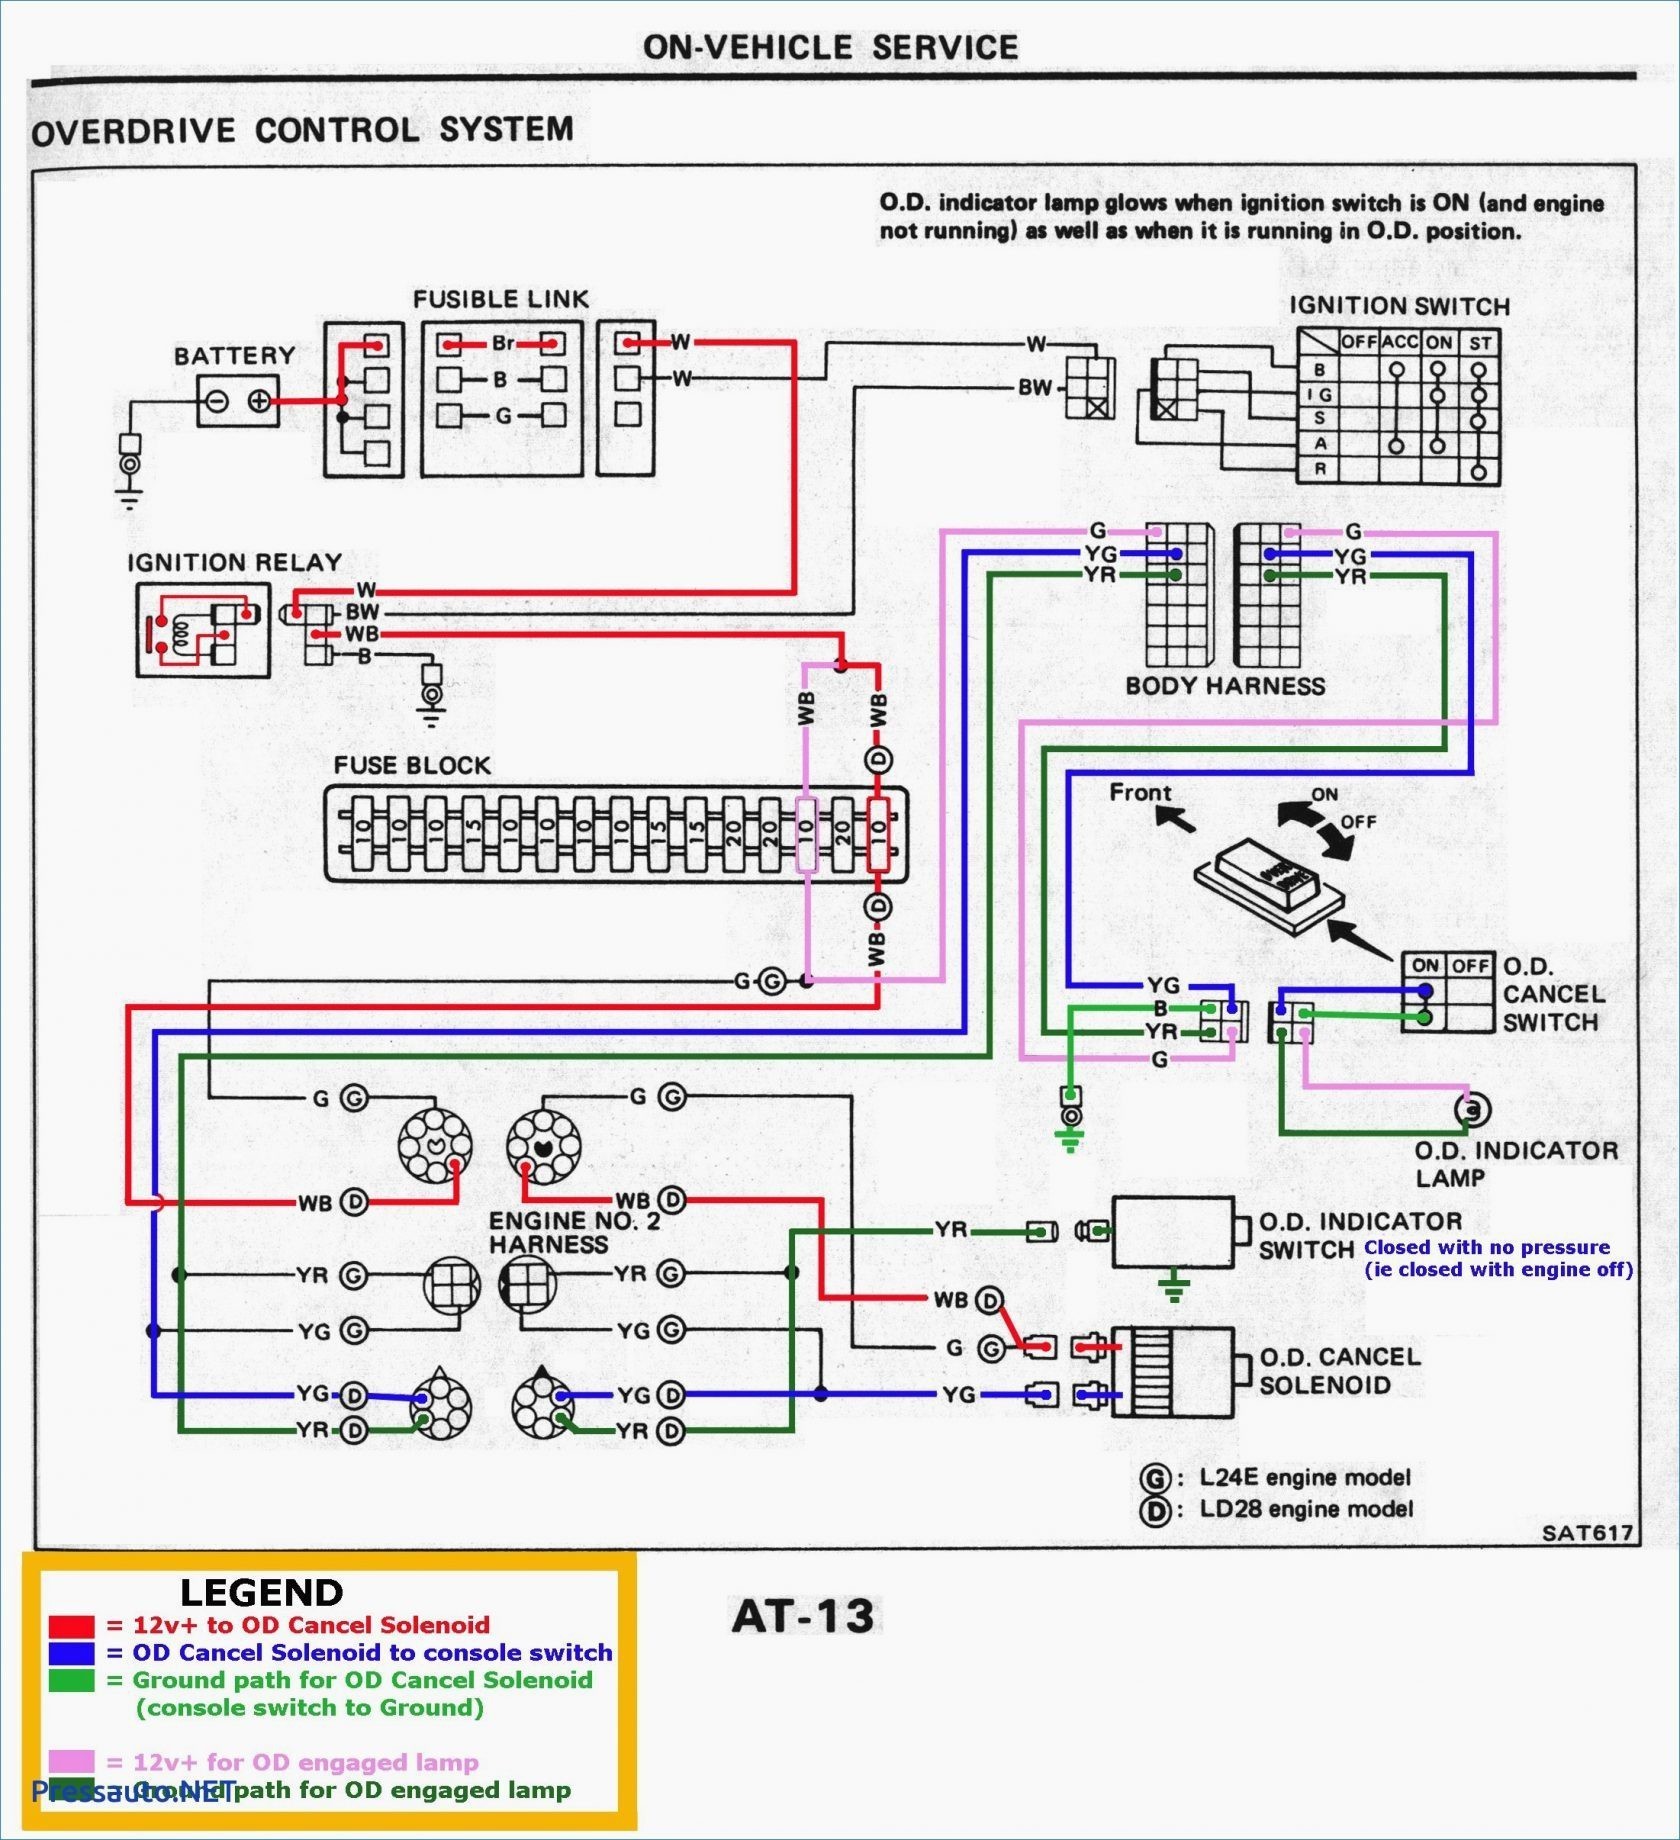 Chevy Lumina Engine Diagram Metro 1 3 Engine Diagrams Wiring Diagram Inside Of Chevy Lumina Engine Diagram